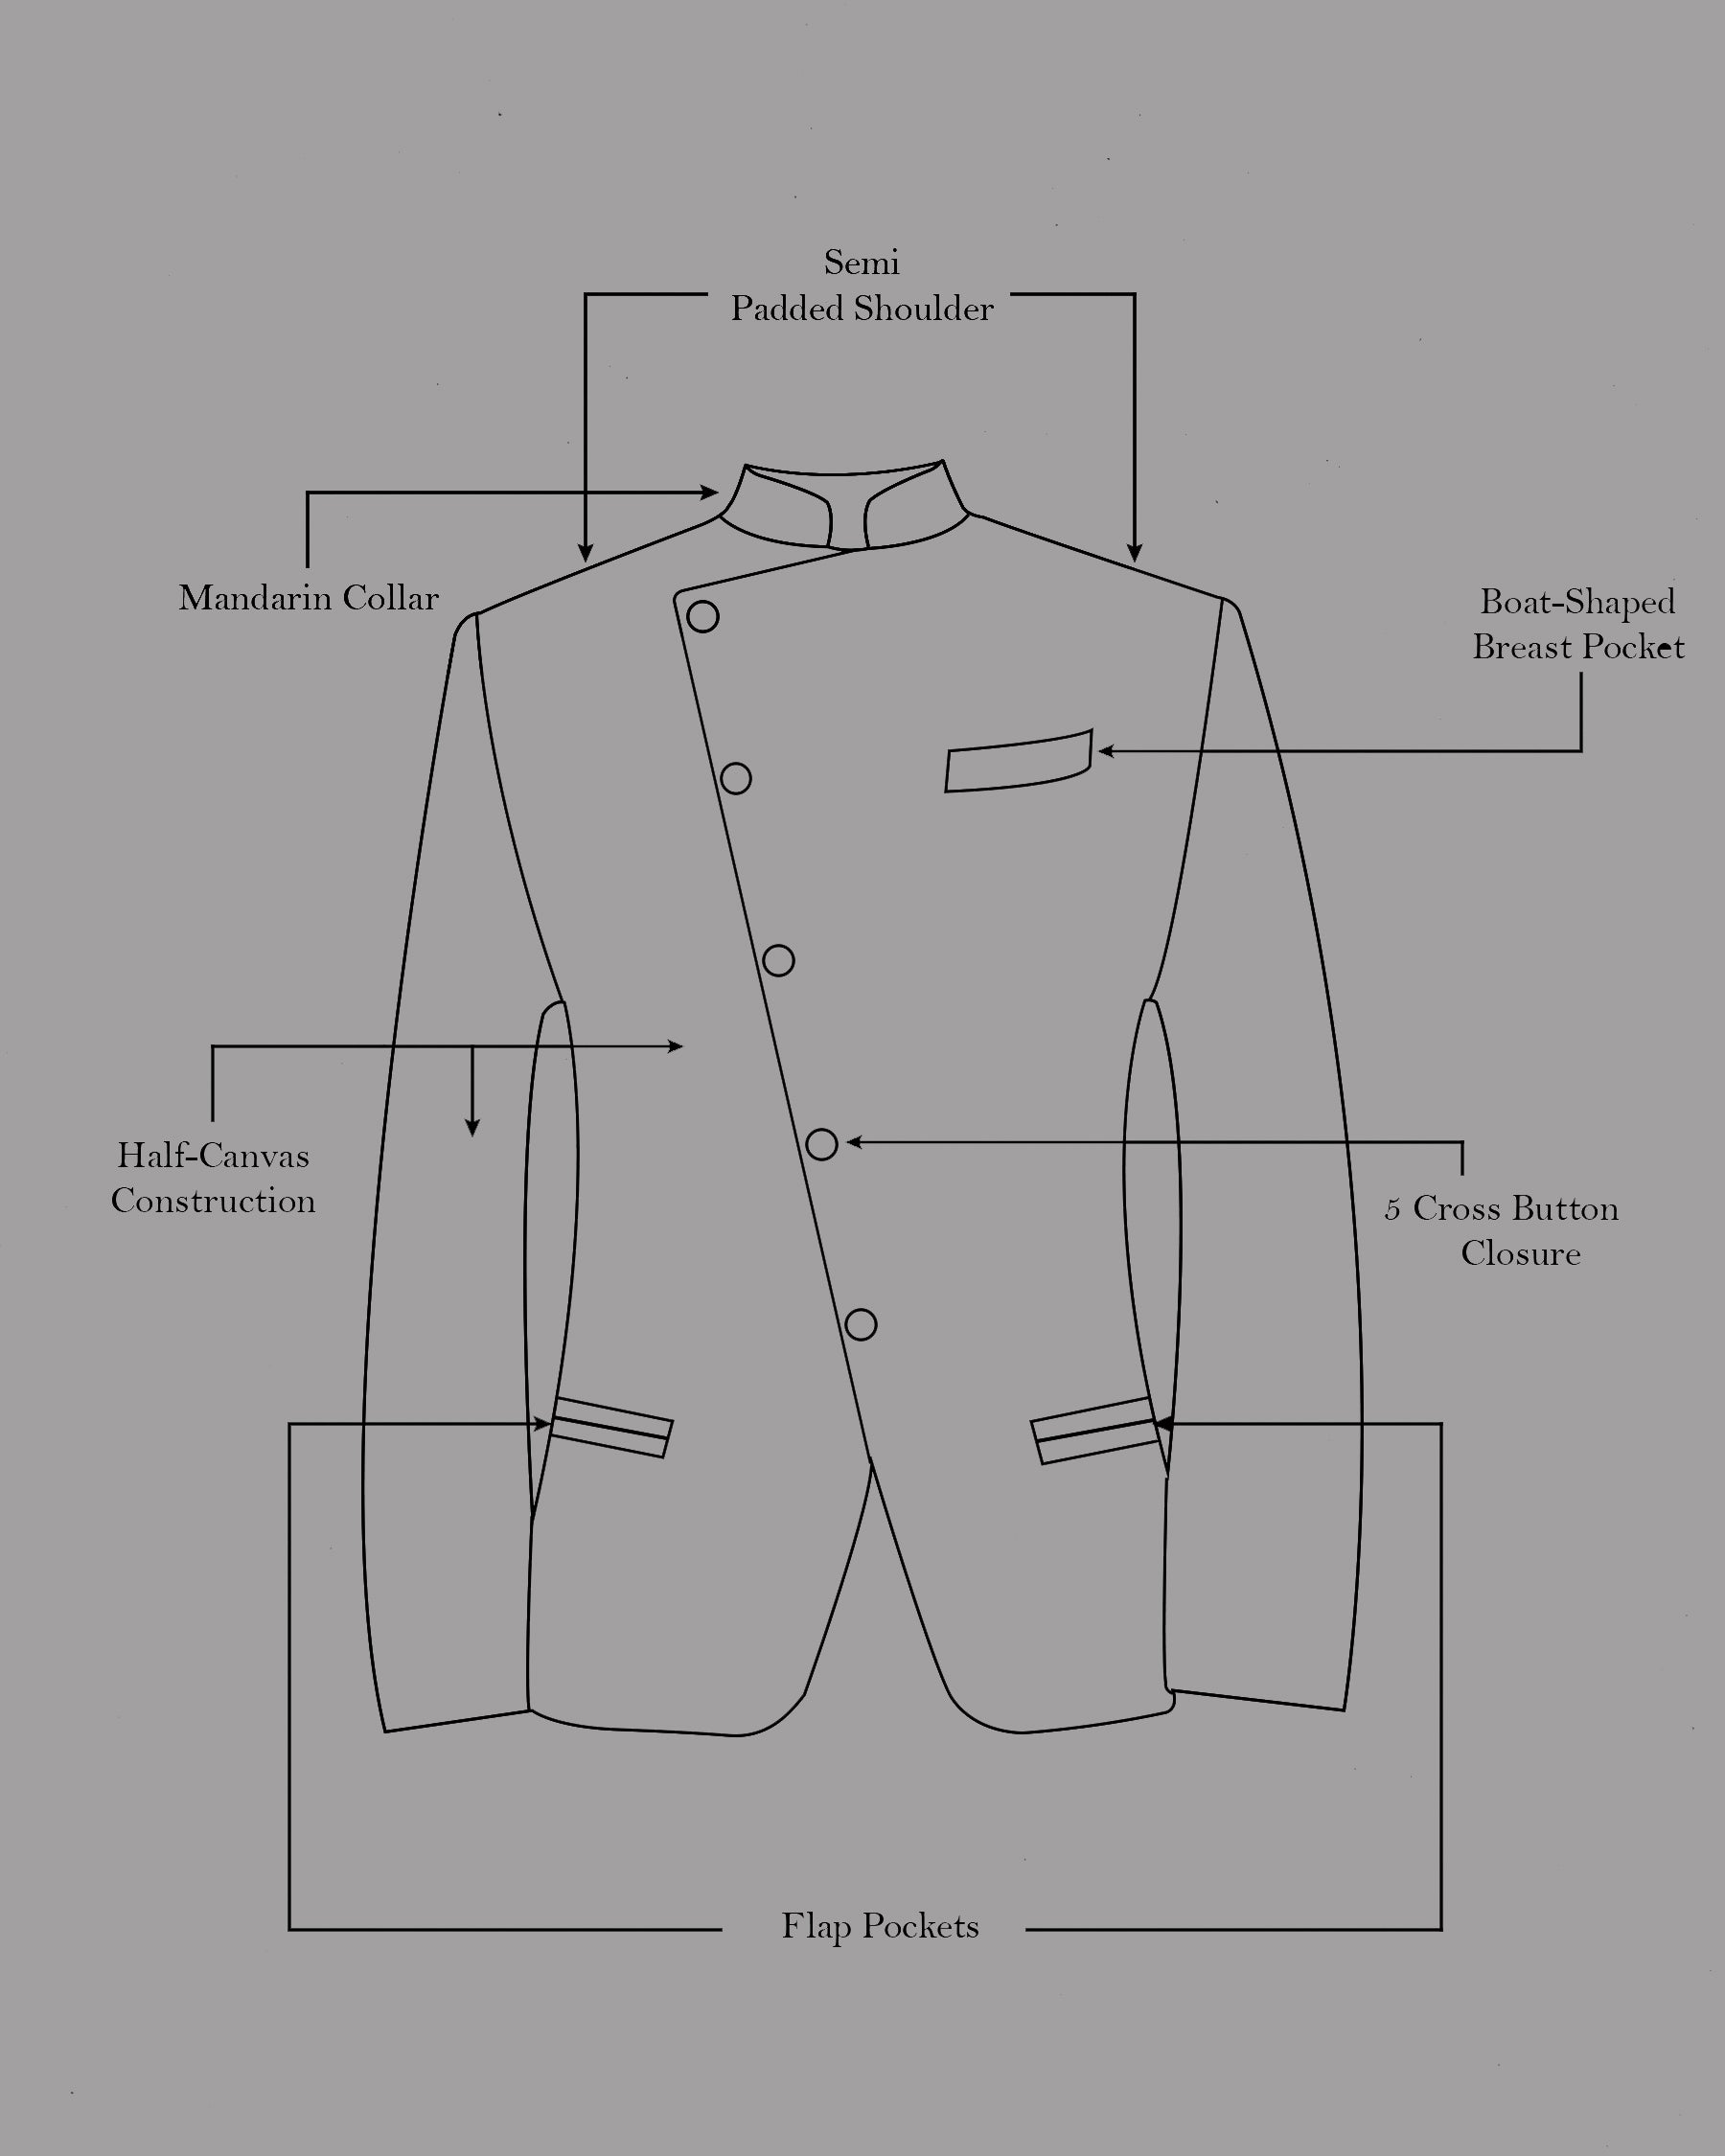 Bone Cross Placket Bandhgala Wool rich Suit